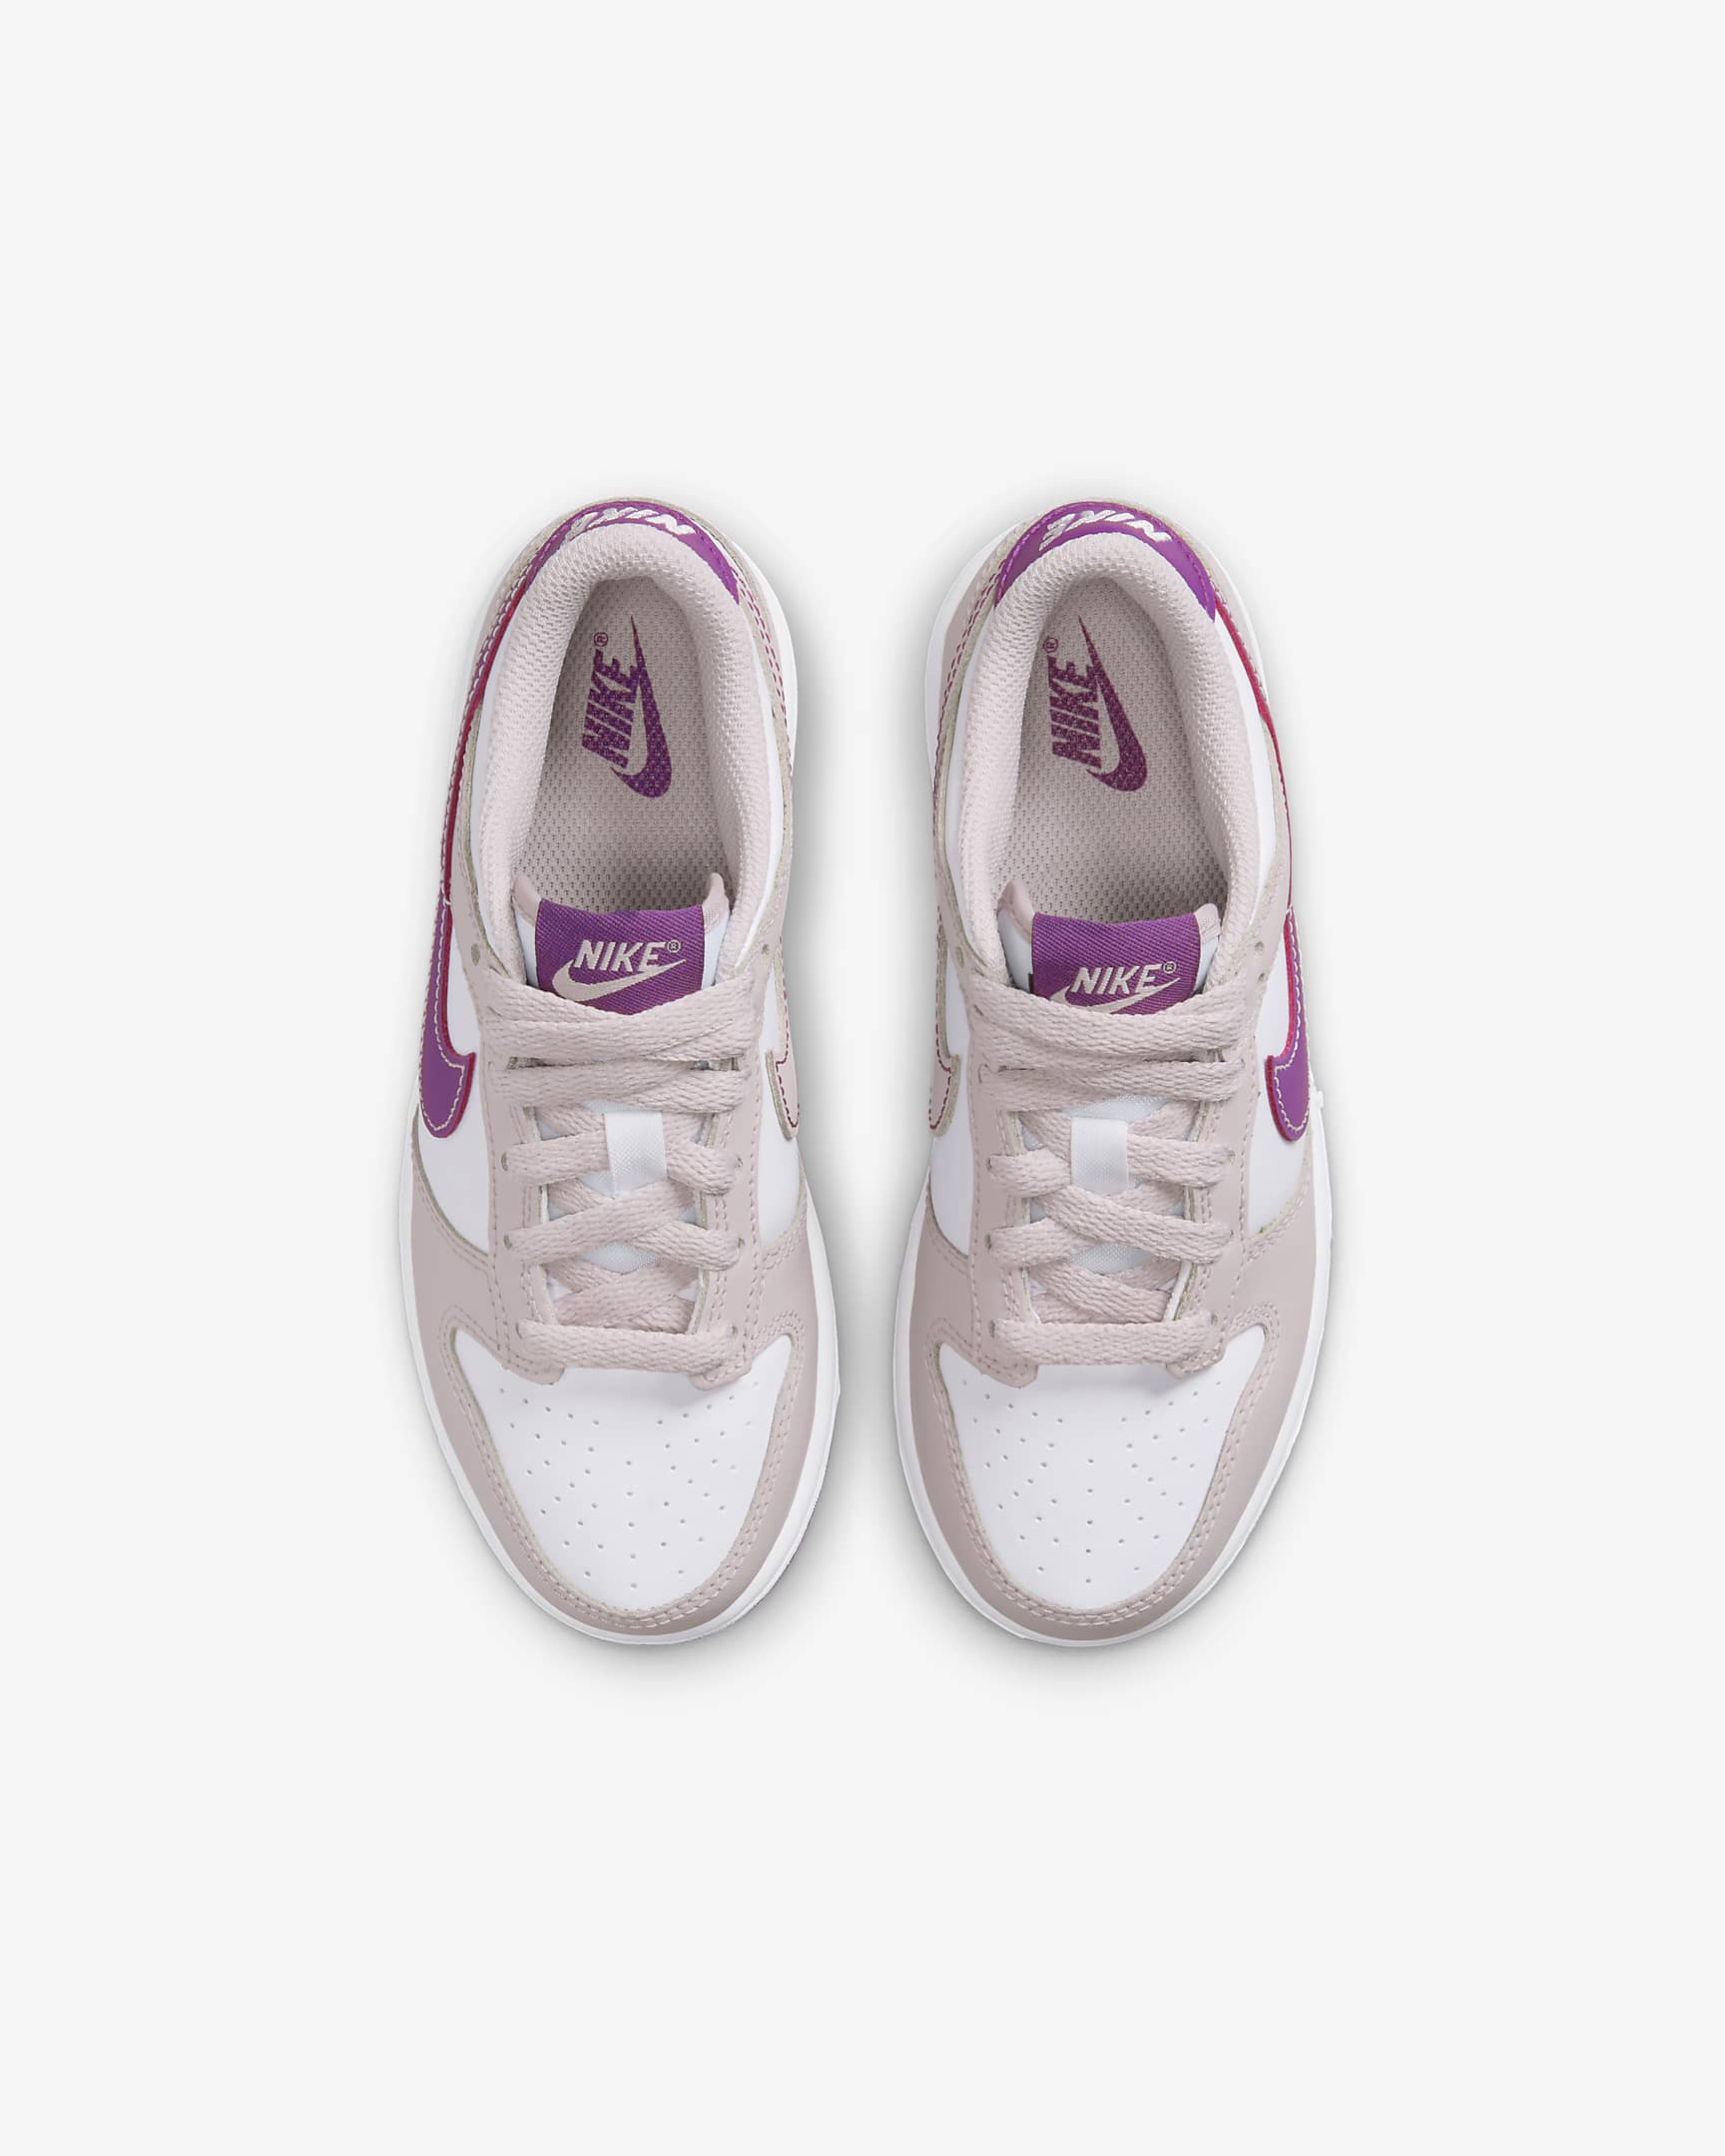 Tenis para niños de preescolar Nike Dunk Low - Blanco/Violeta platino/Violeta viotech